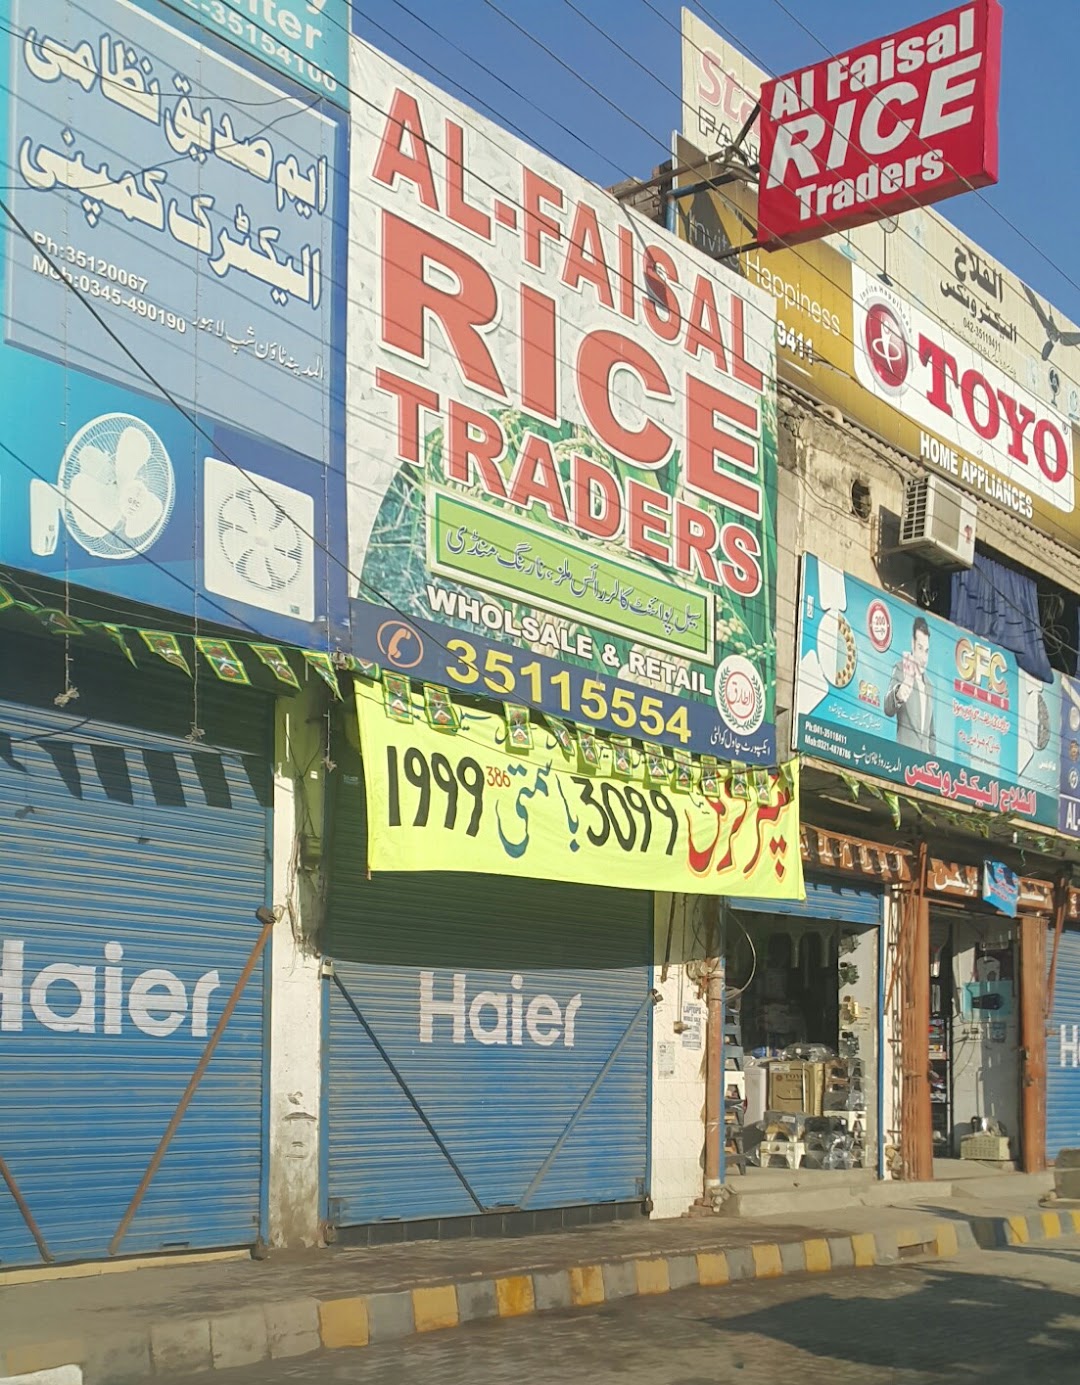 Al-Faisal Rice Traders